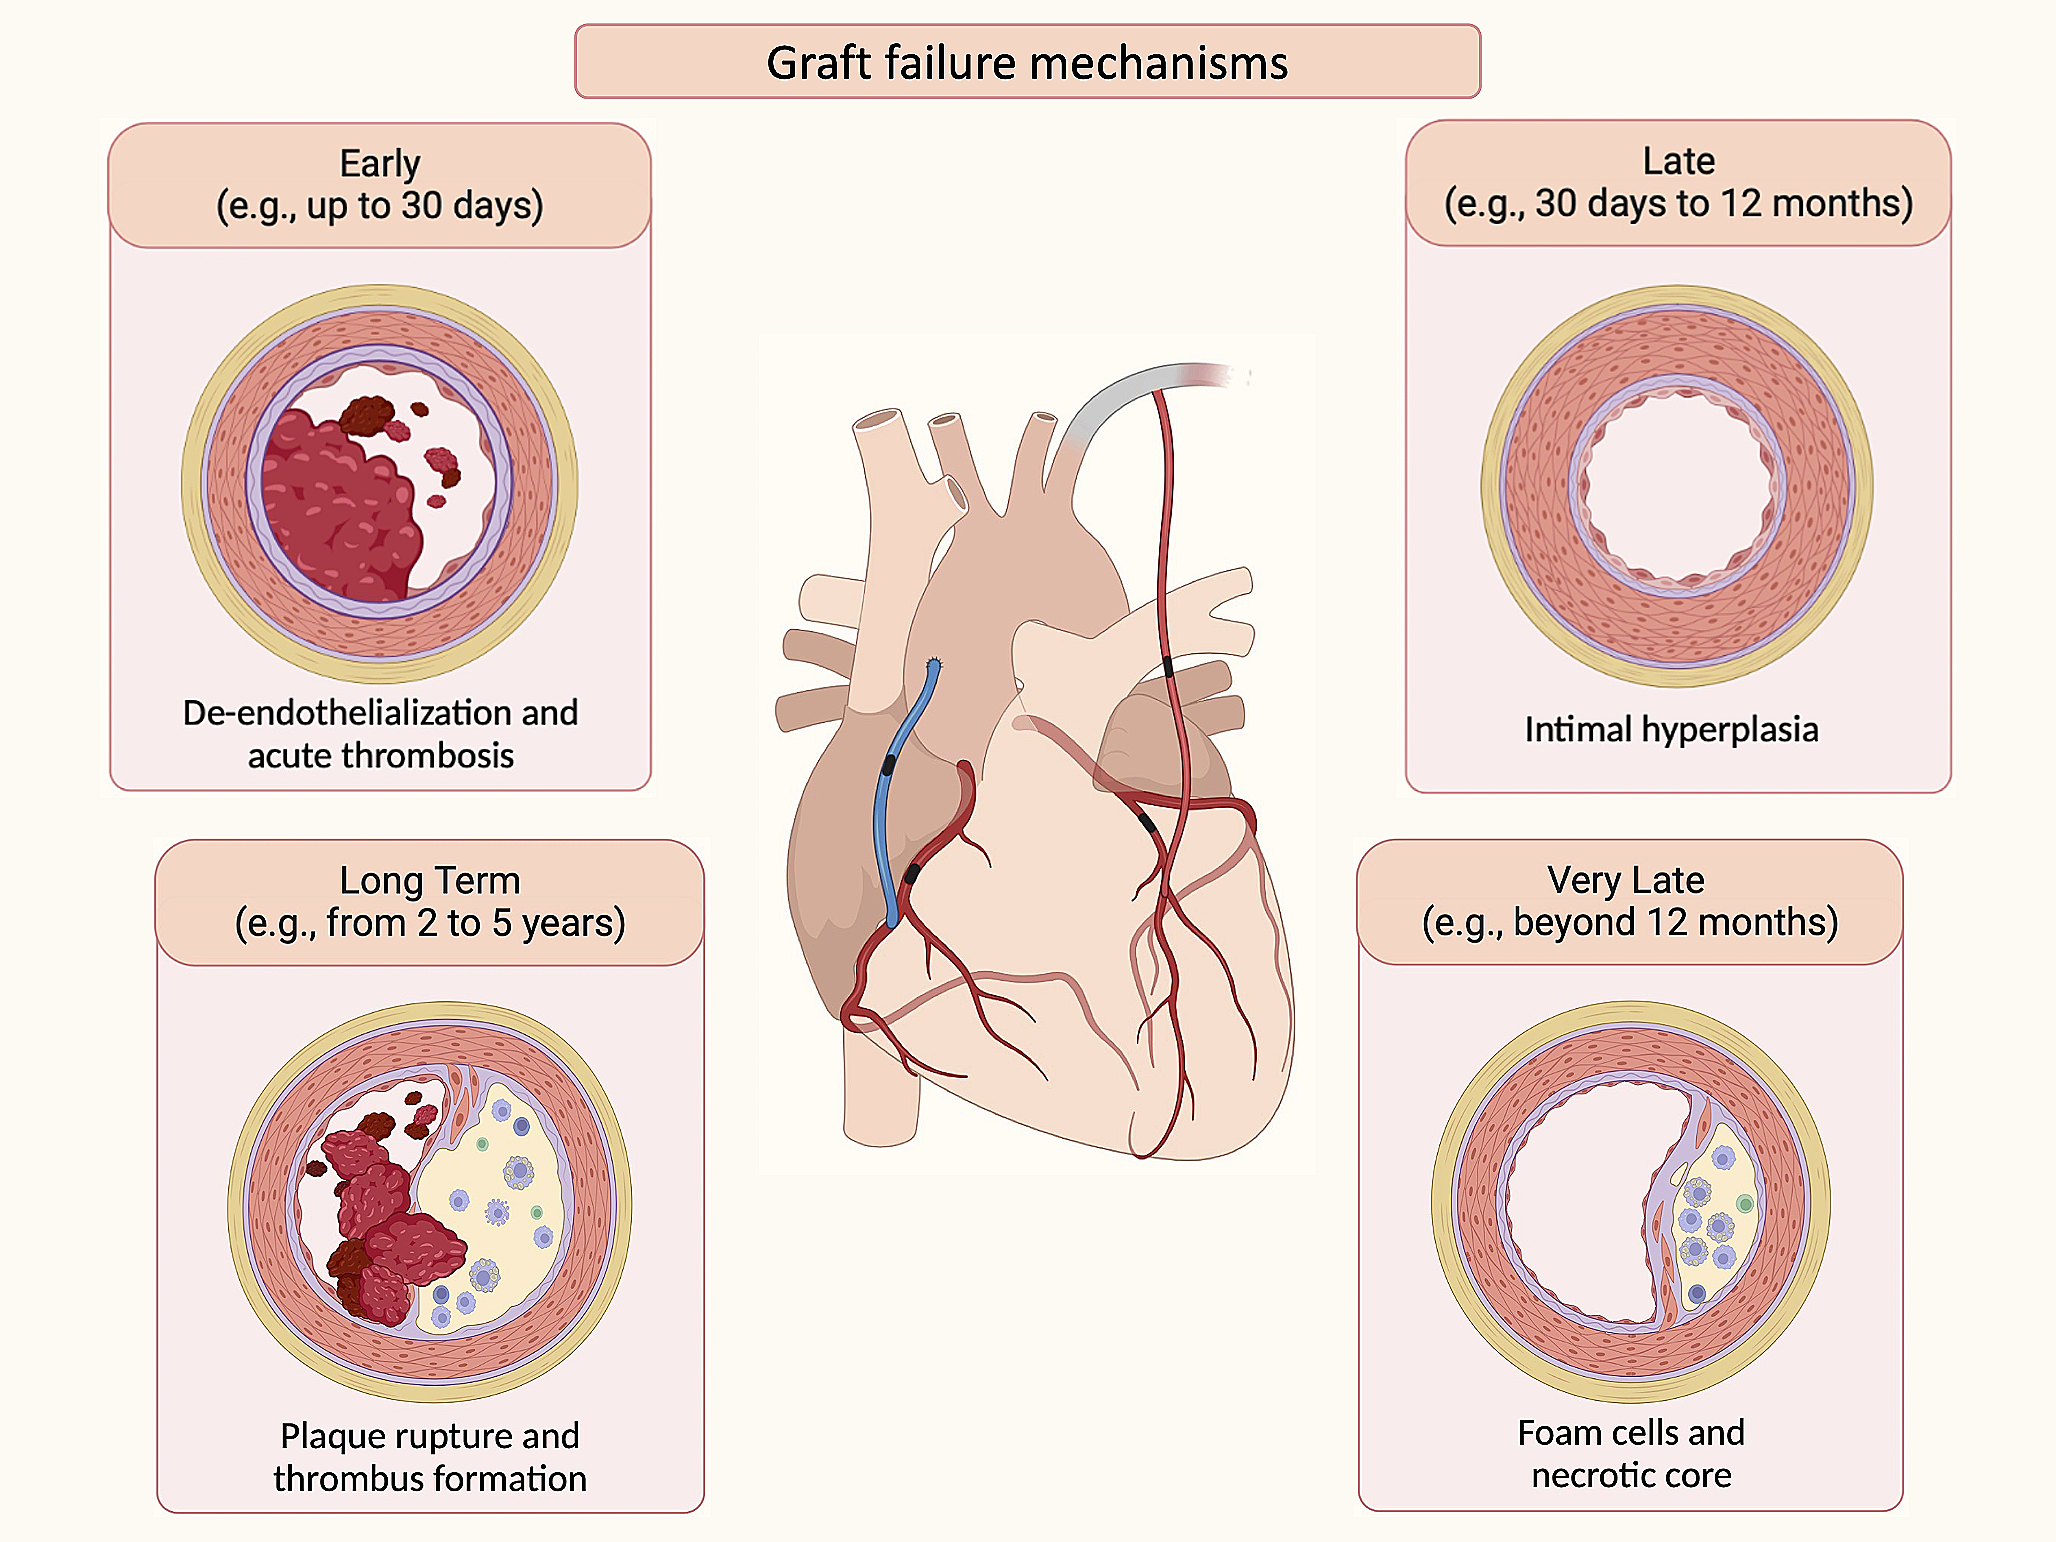 Antithrombotic strategies for preventing graft failure in coronary artery bypass graft